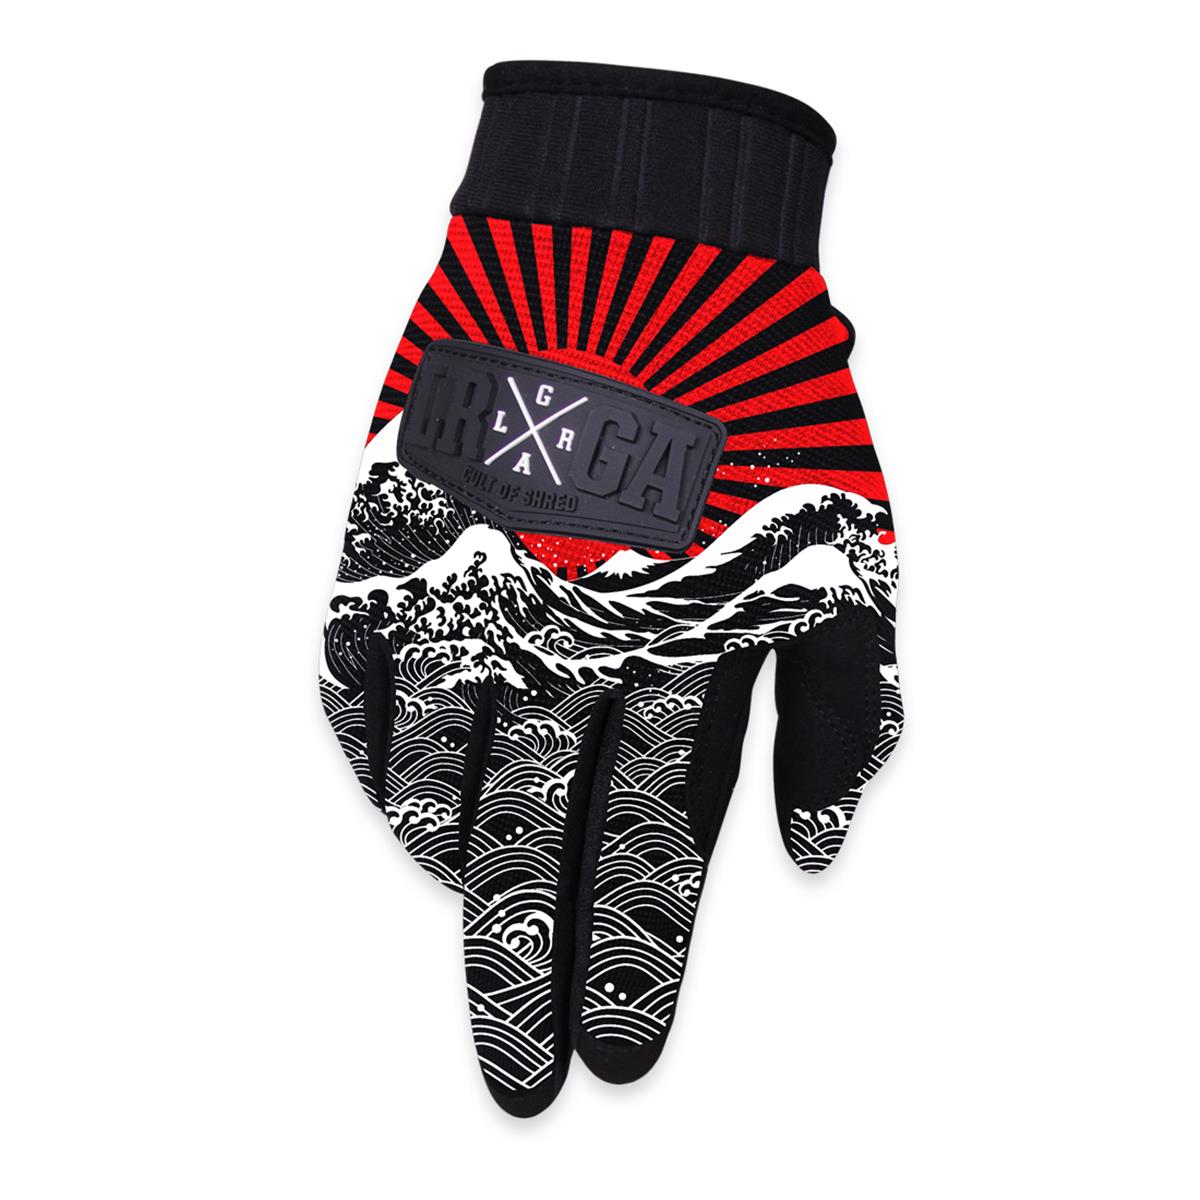 Loose Riders MTB-Handschuhe Freeride Rising Sun - Schwarz/Rot